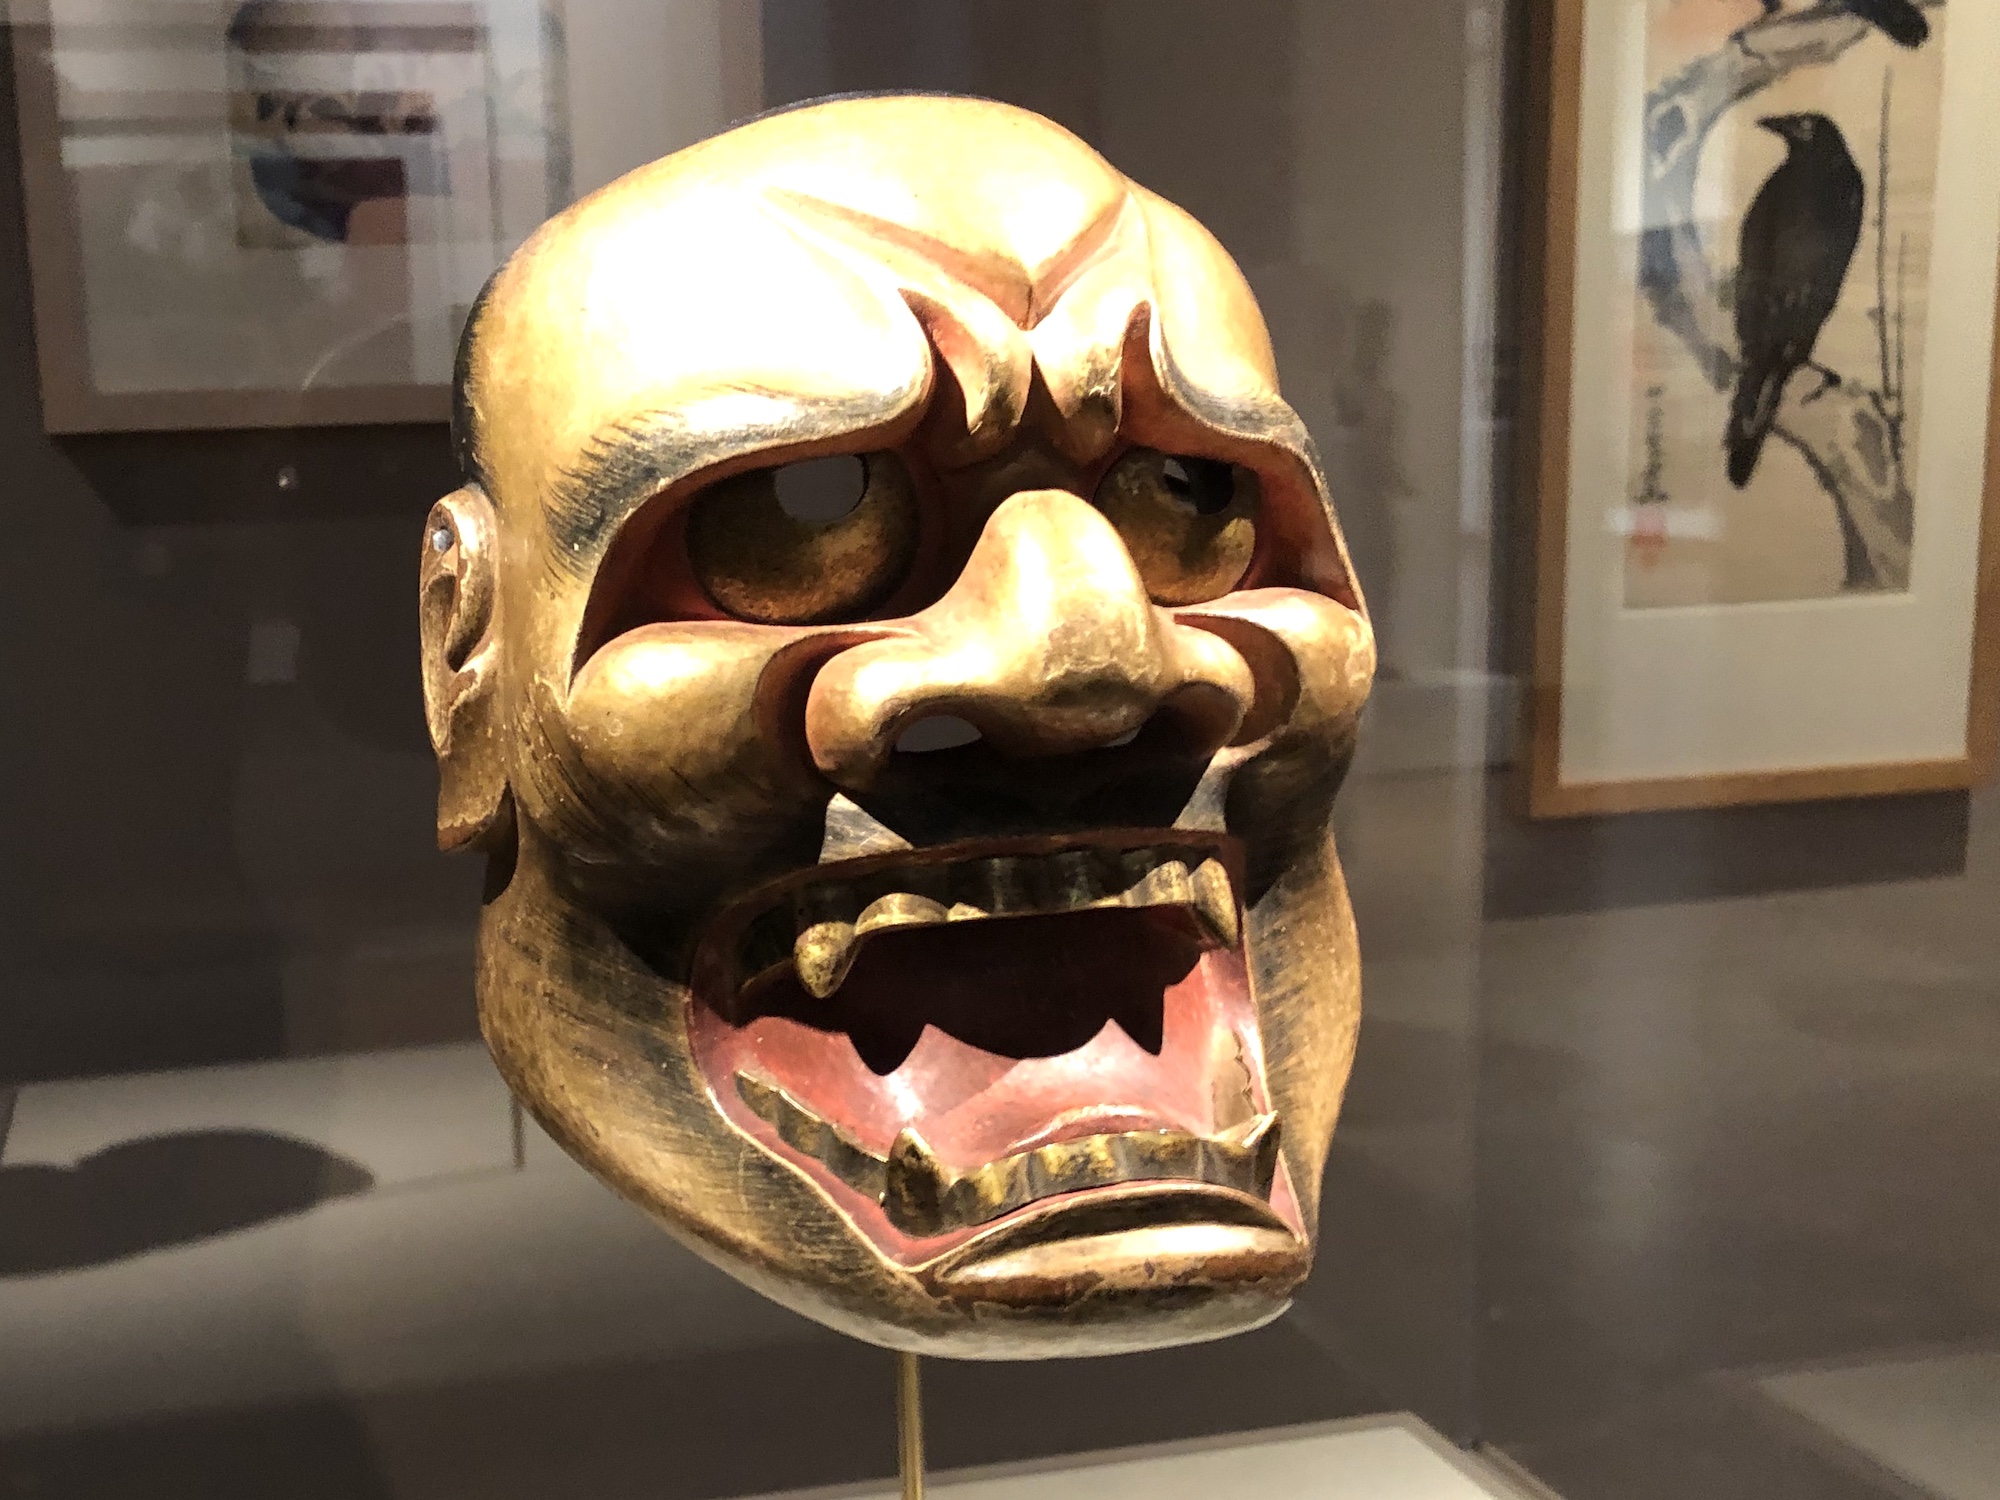 Japanese Noh Mask of Shishiguchi at the Chazen Museum of Art in Madison Wisconsin.